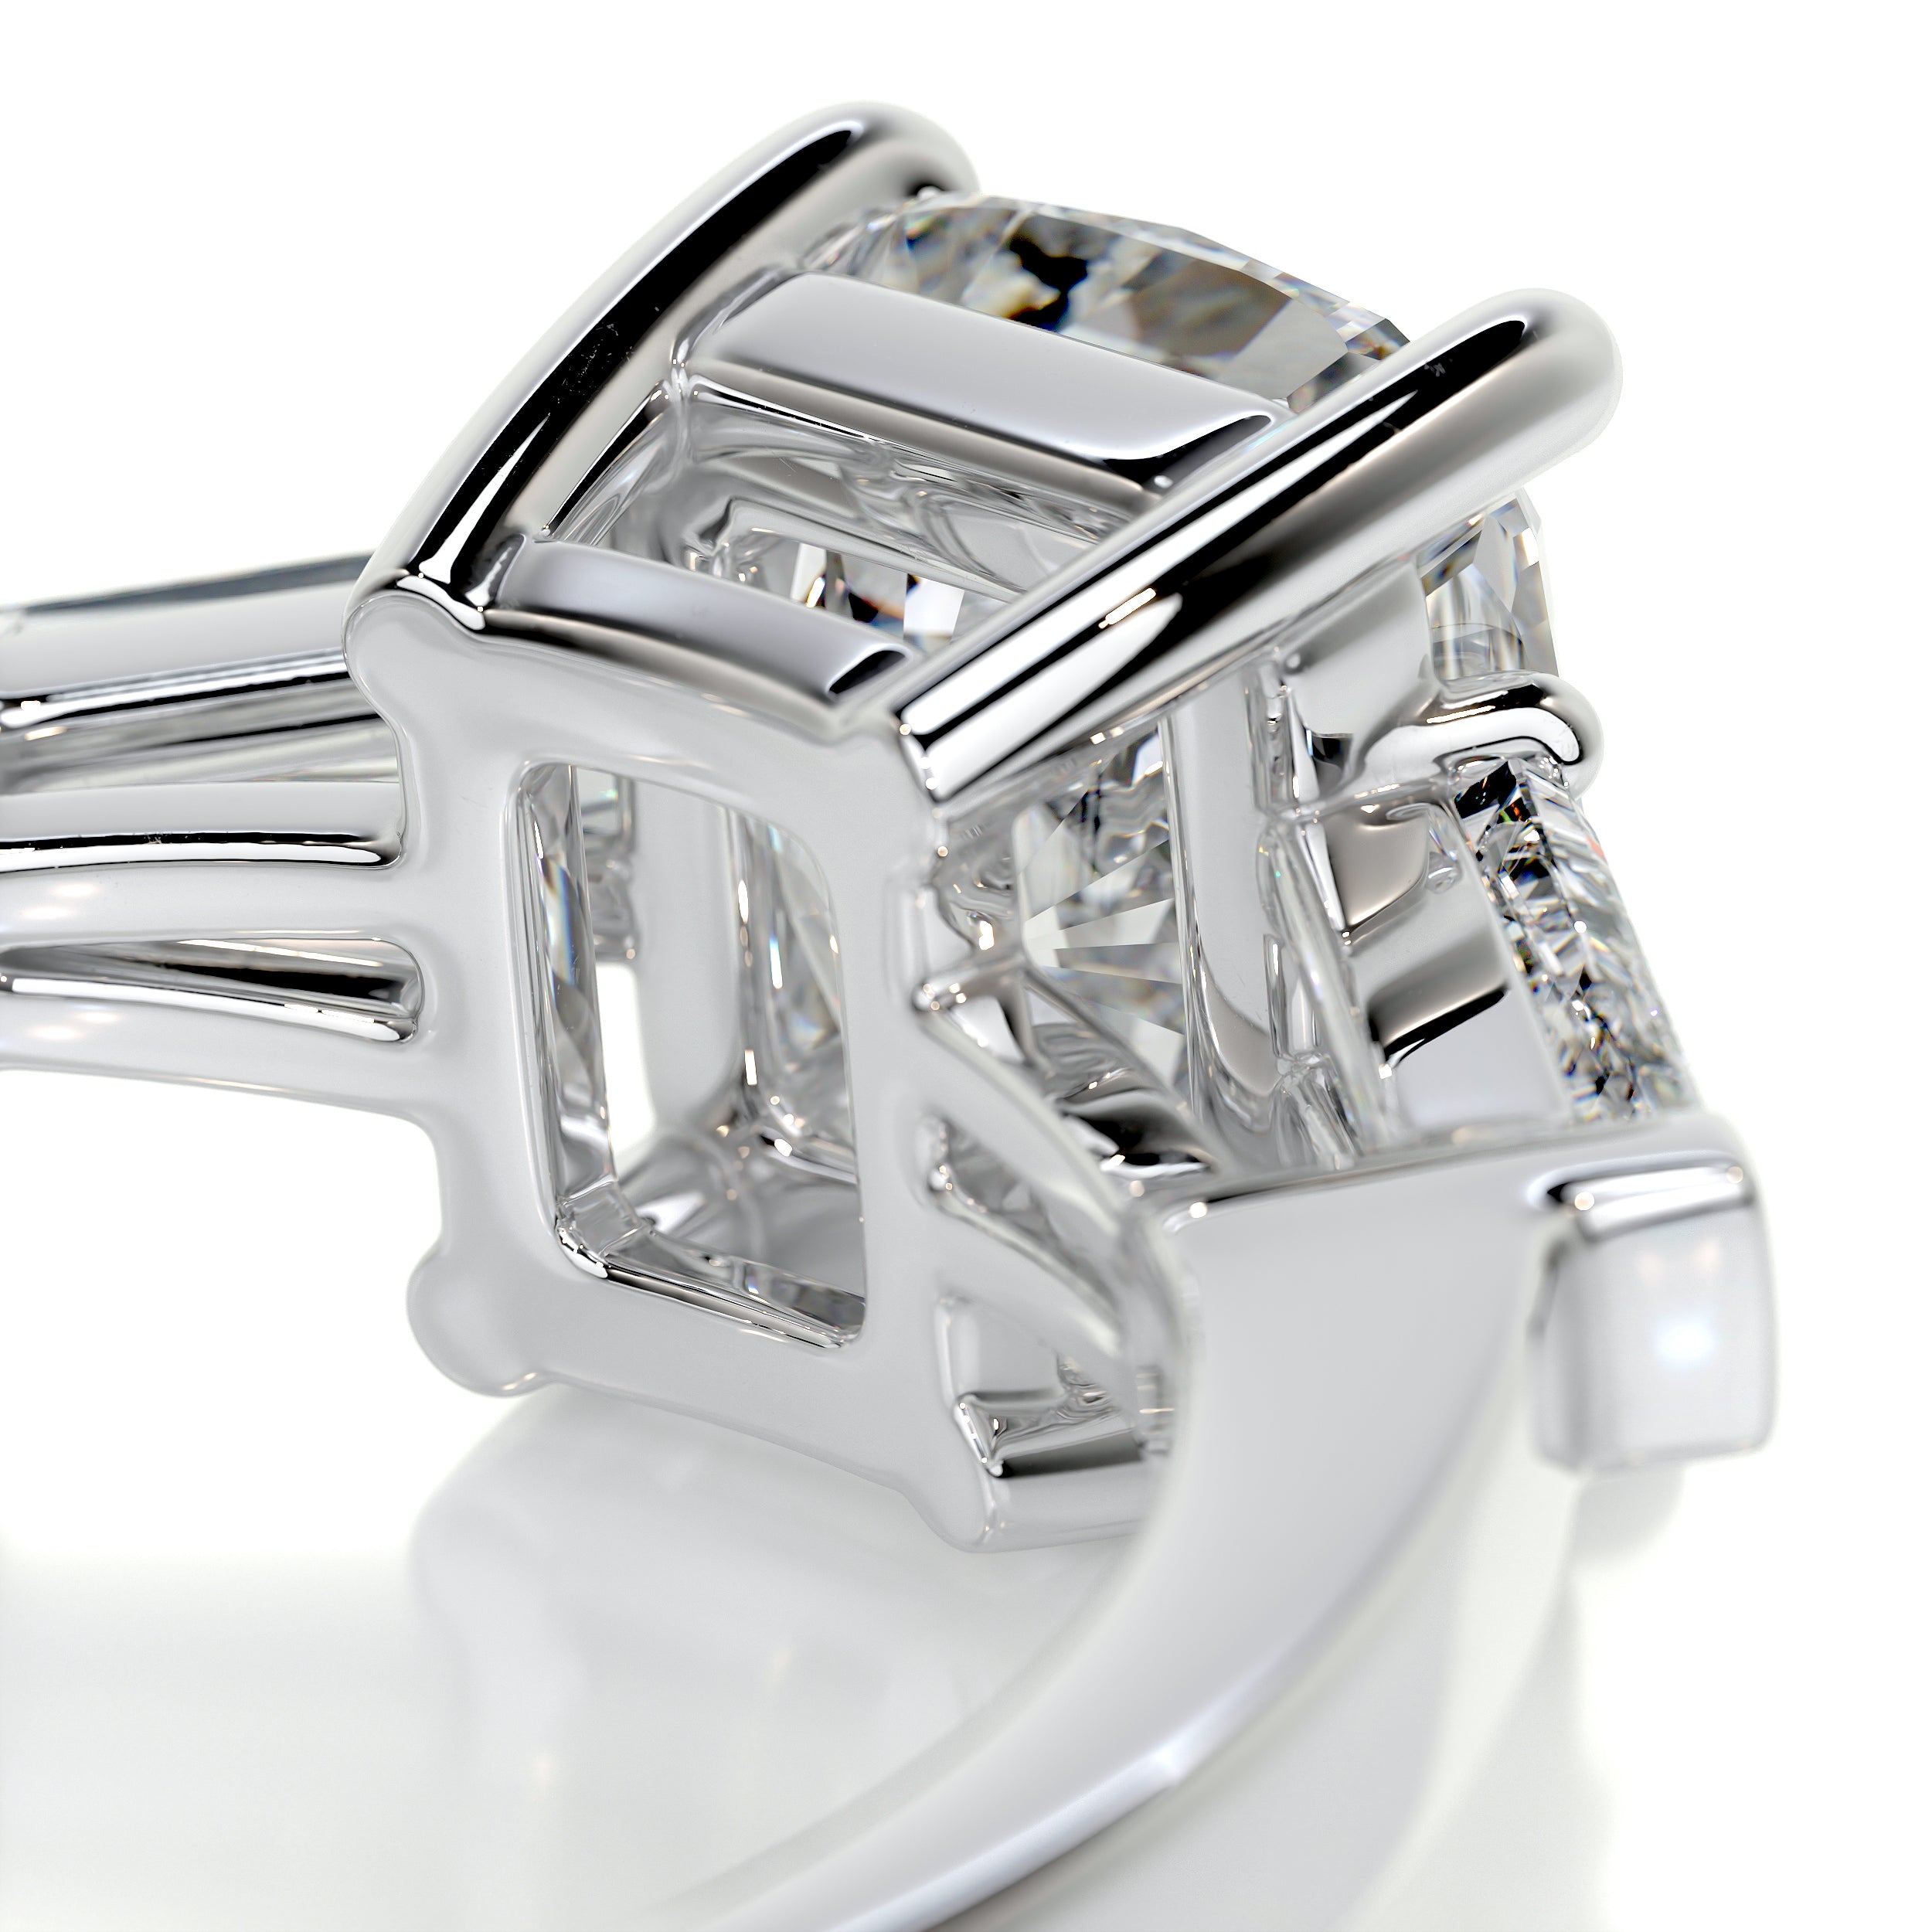 Skylar Diamond Engagement Ring   (1.80 Carat) -Platinum